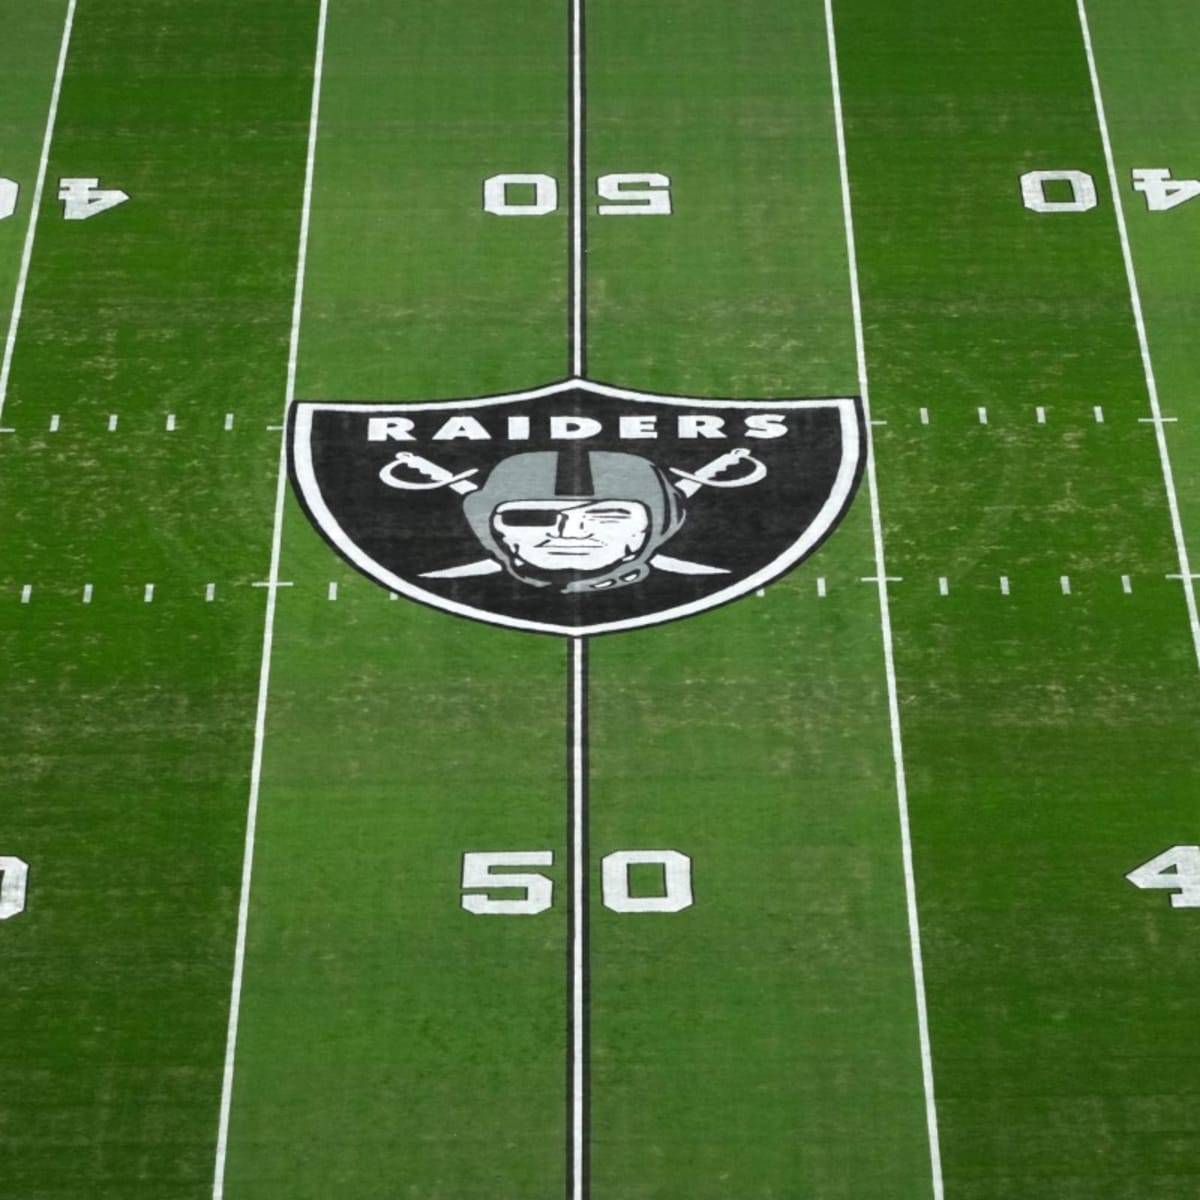 Las Vegas Raiders opponents announced for 2023 season